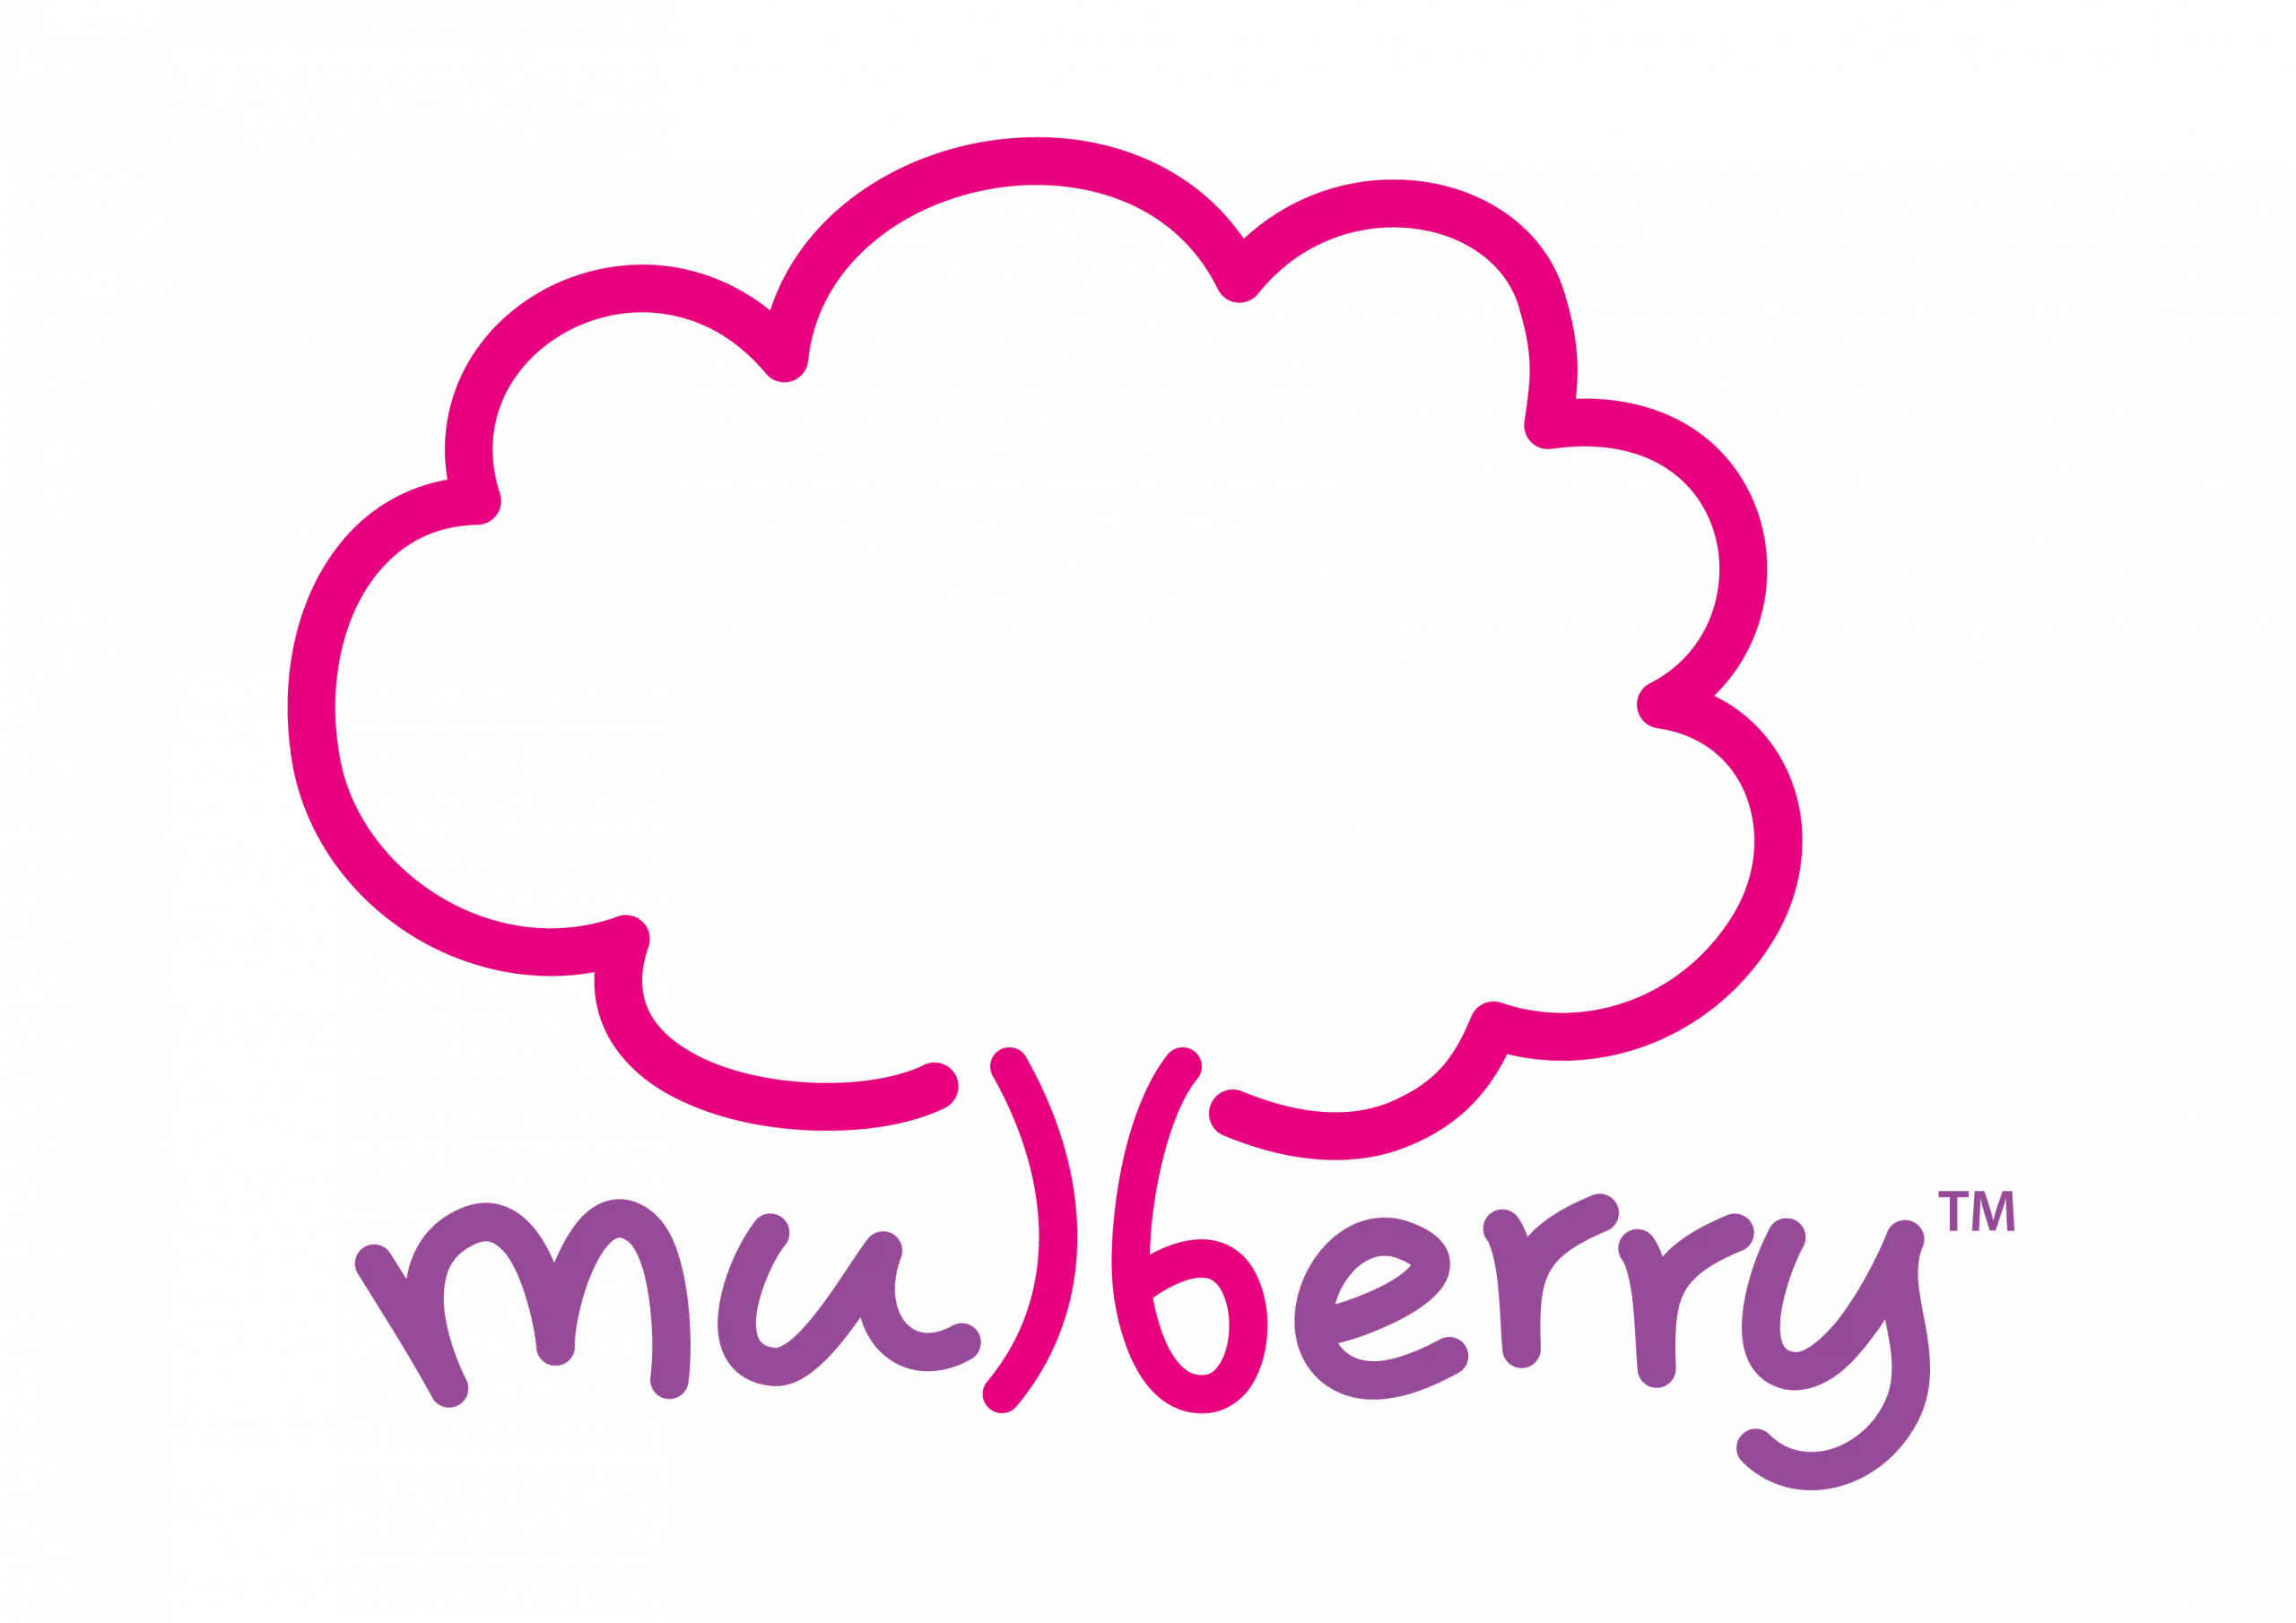 executive coaching / mulberry tree coaching / cambridge / online